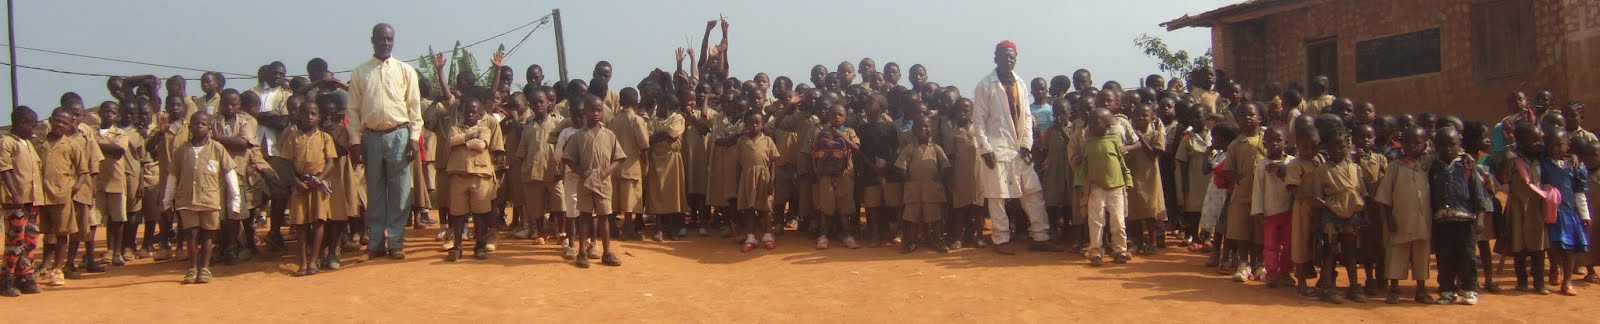 Ecole St. Albert Le Grand in Bazou, Cameroon